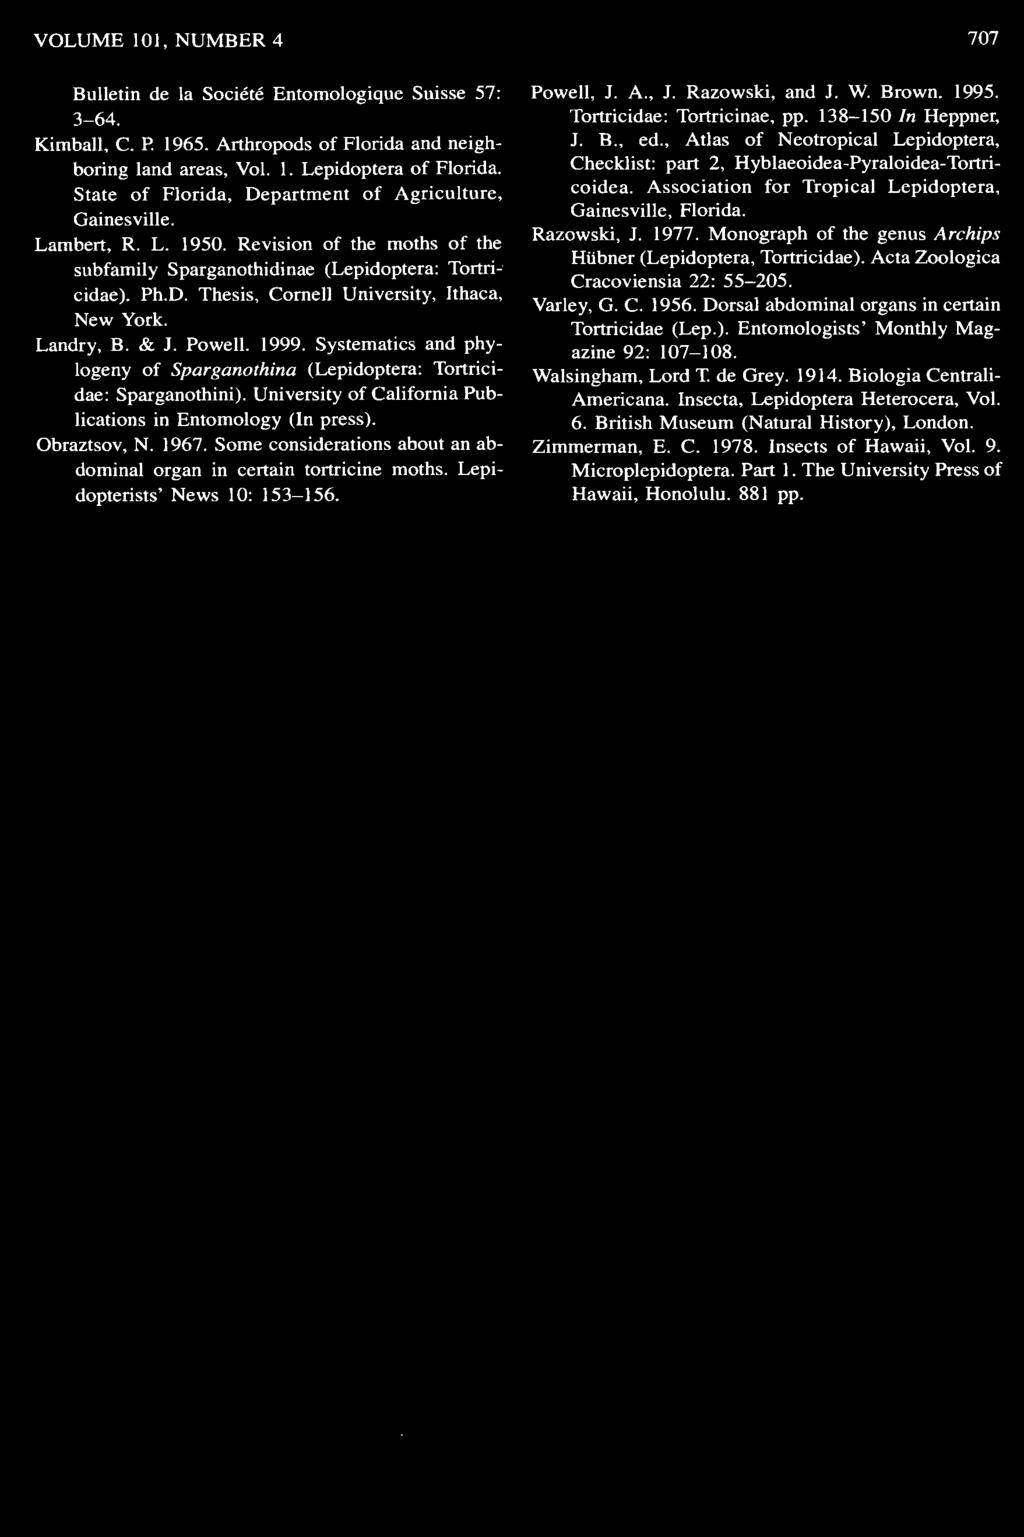 Landry, B. & J. Powell. 1999. Systematics and phylogeny of Sparganothina (Lepidoptera: Tortricidae: Sparganothini). University of California Publications in Entomology (In press). Obraztsov, N. 1967.